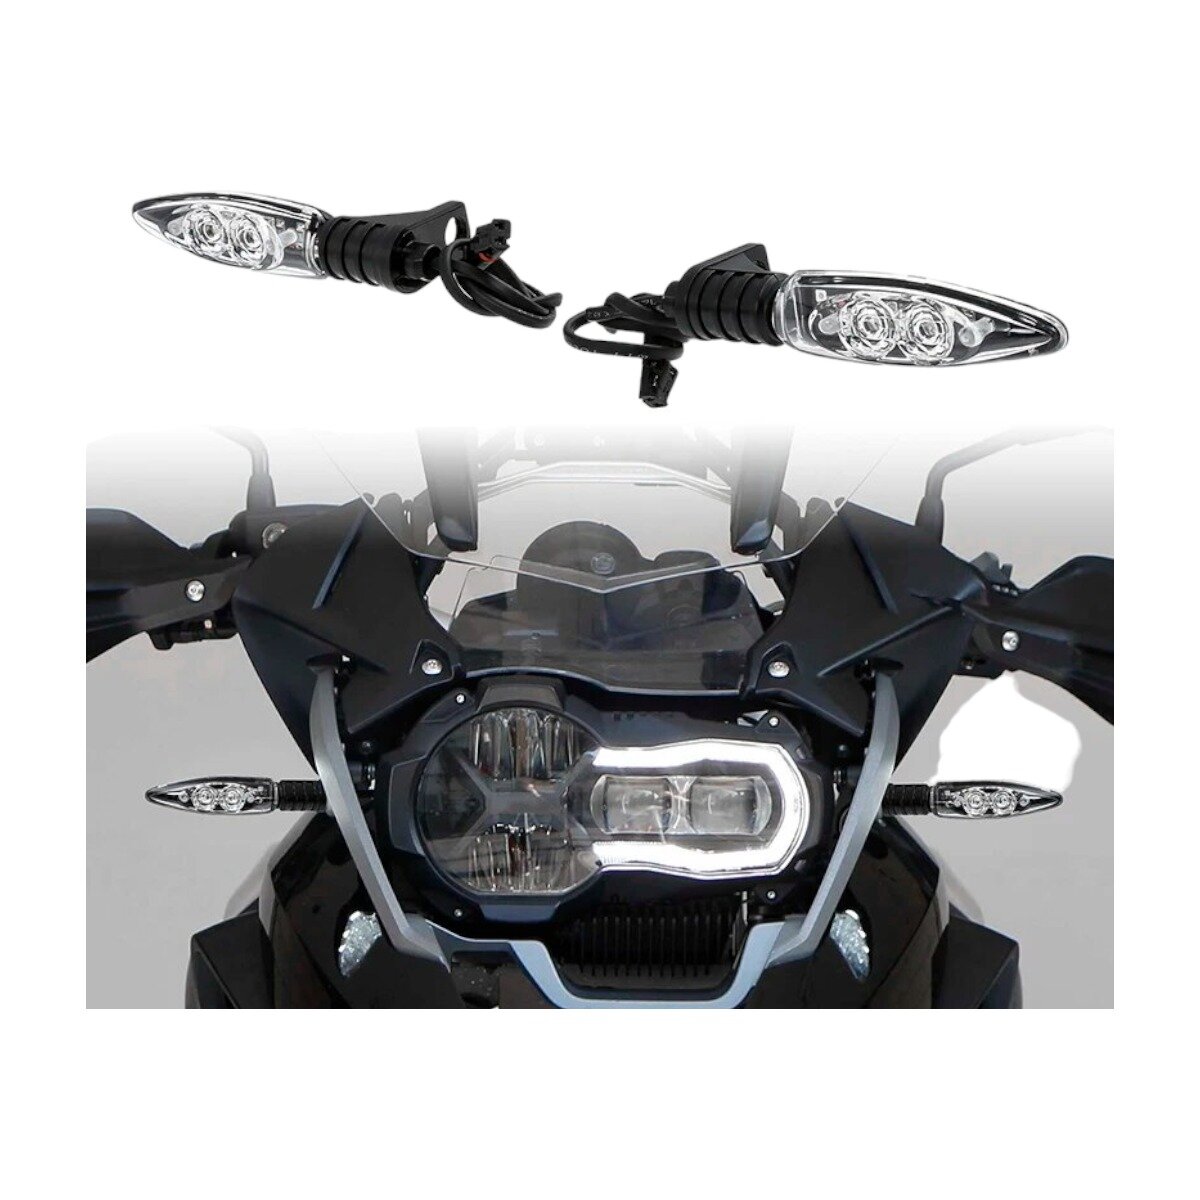 Поворотники LED прозрачные на мотоцикл BMW F800GS (08-12) для мотоциклиста, черные